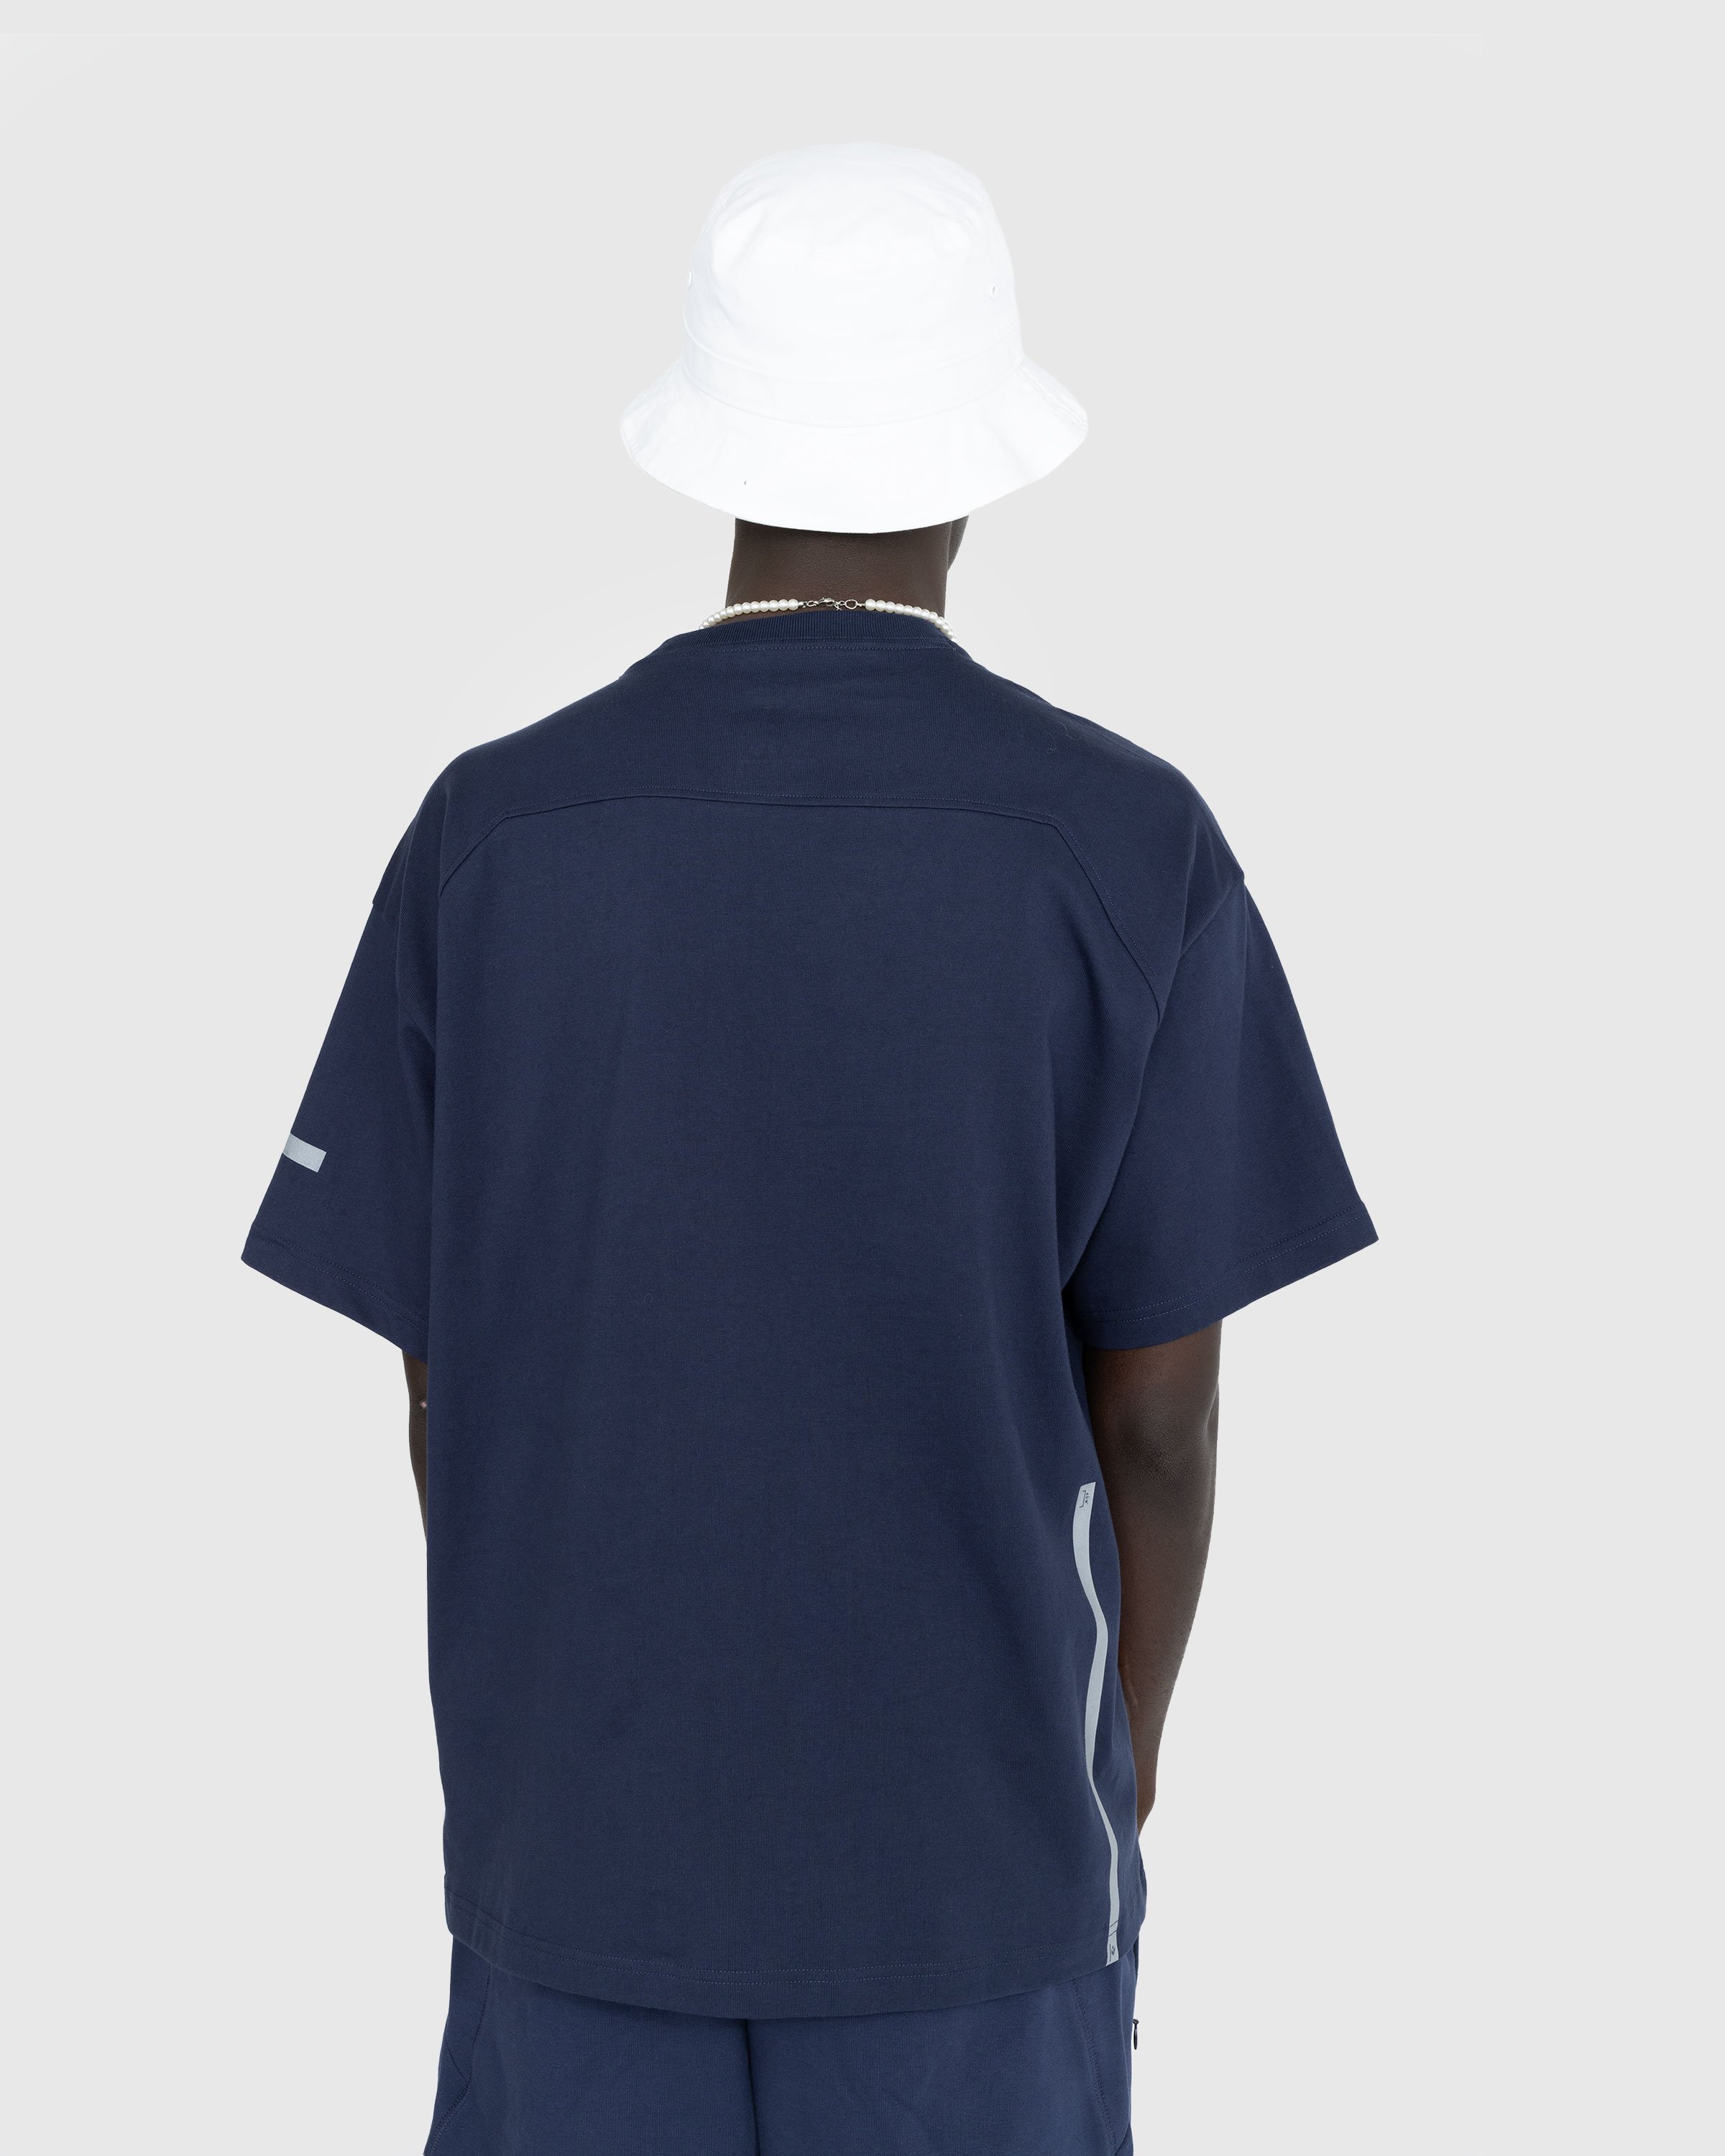 Converse x A-Cold-Wall* - Reflective T-Shirt Navy - Clothing - Blue - Image 3